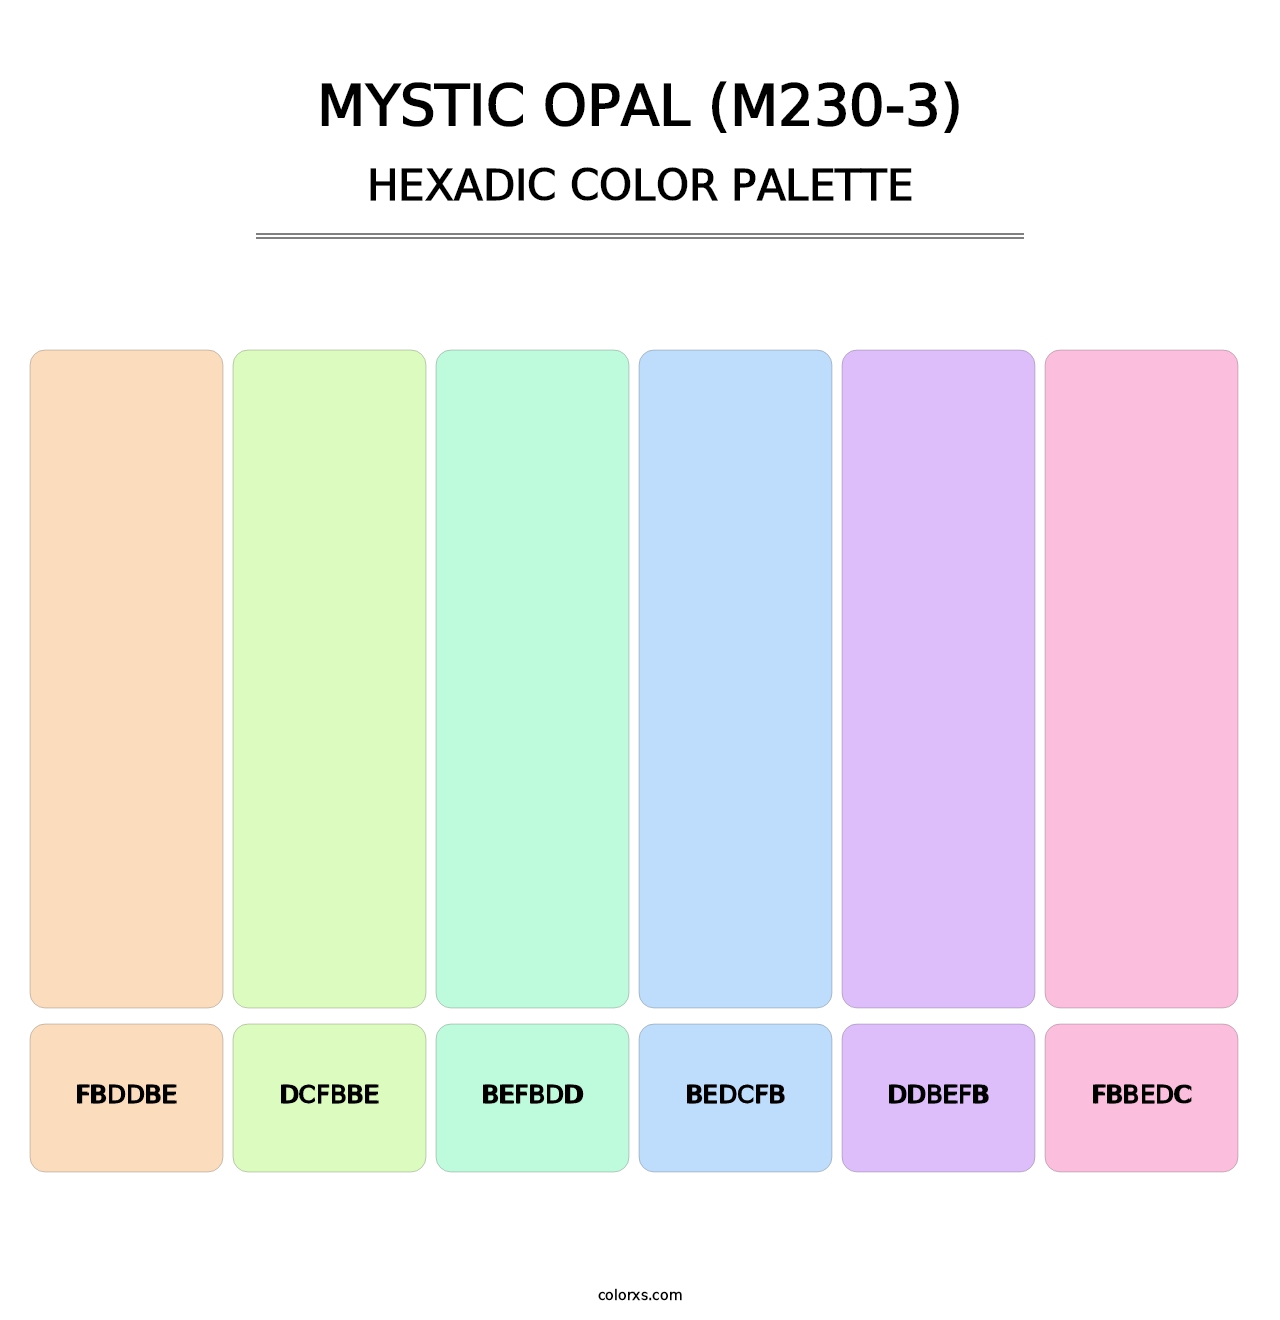 Mystic Opal (M230-3) - Hexadic Color Palette